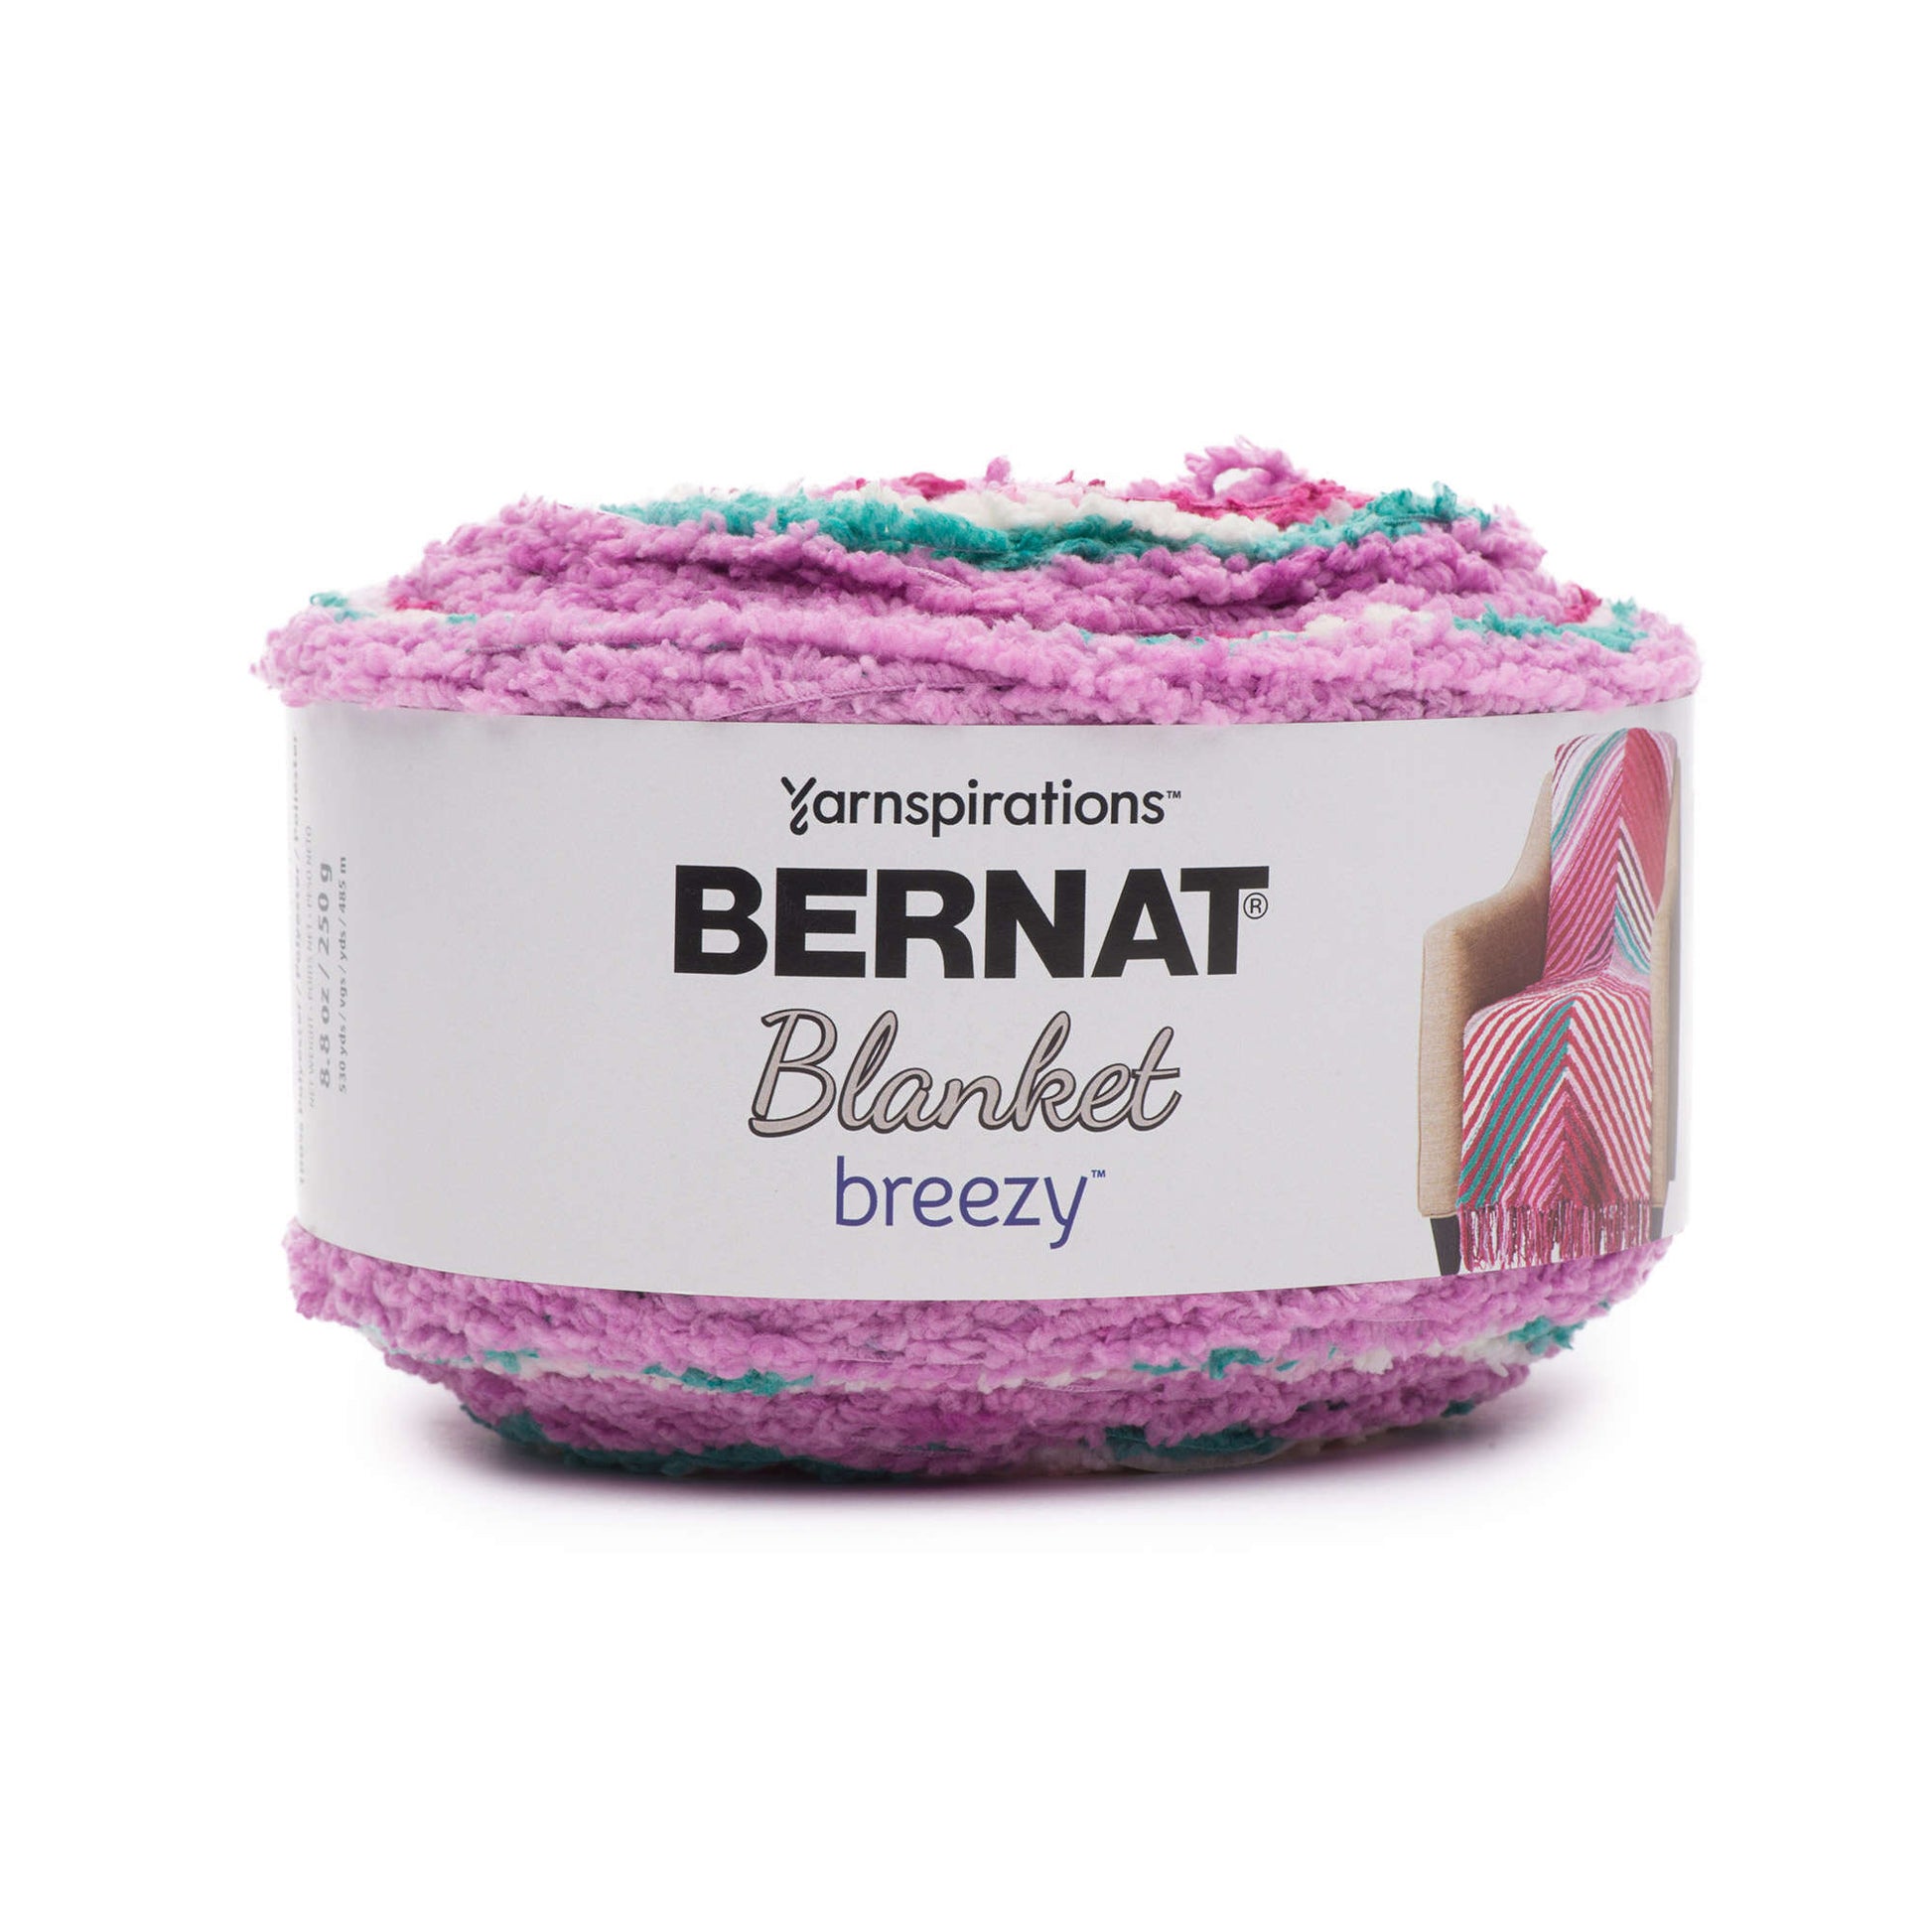 Bernat Blanket Breezy Yarn - Discontinued Shades